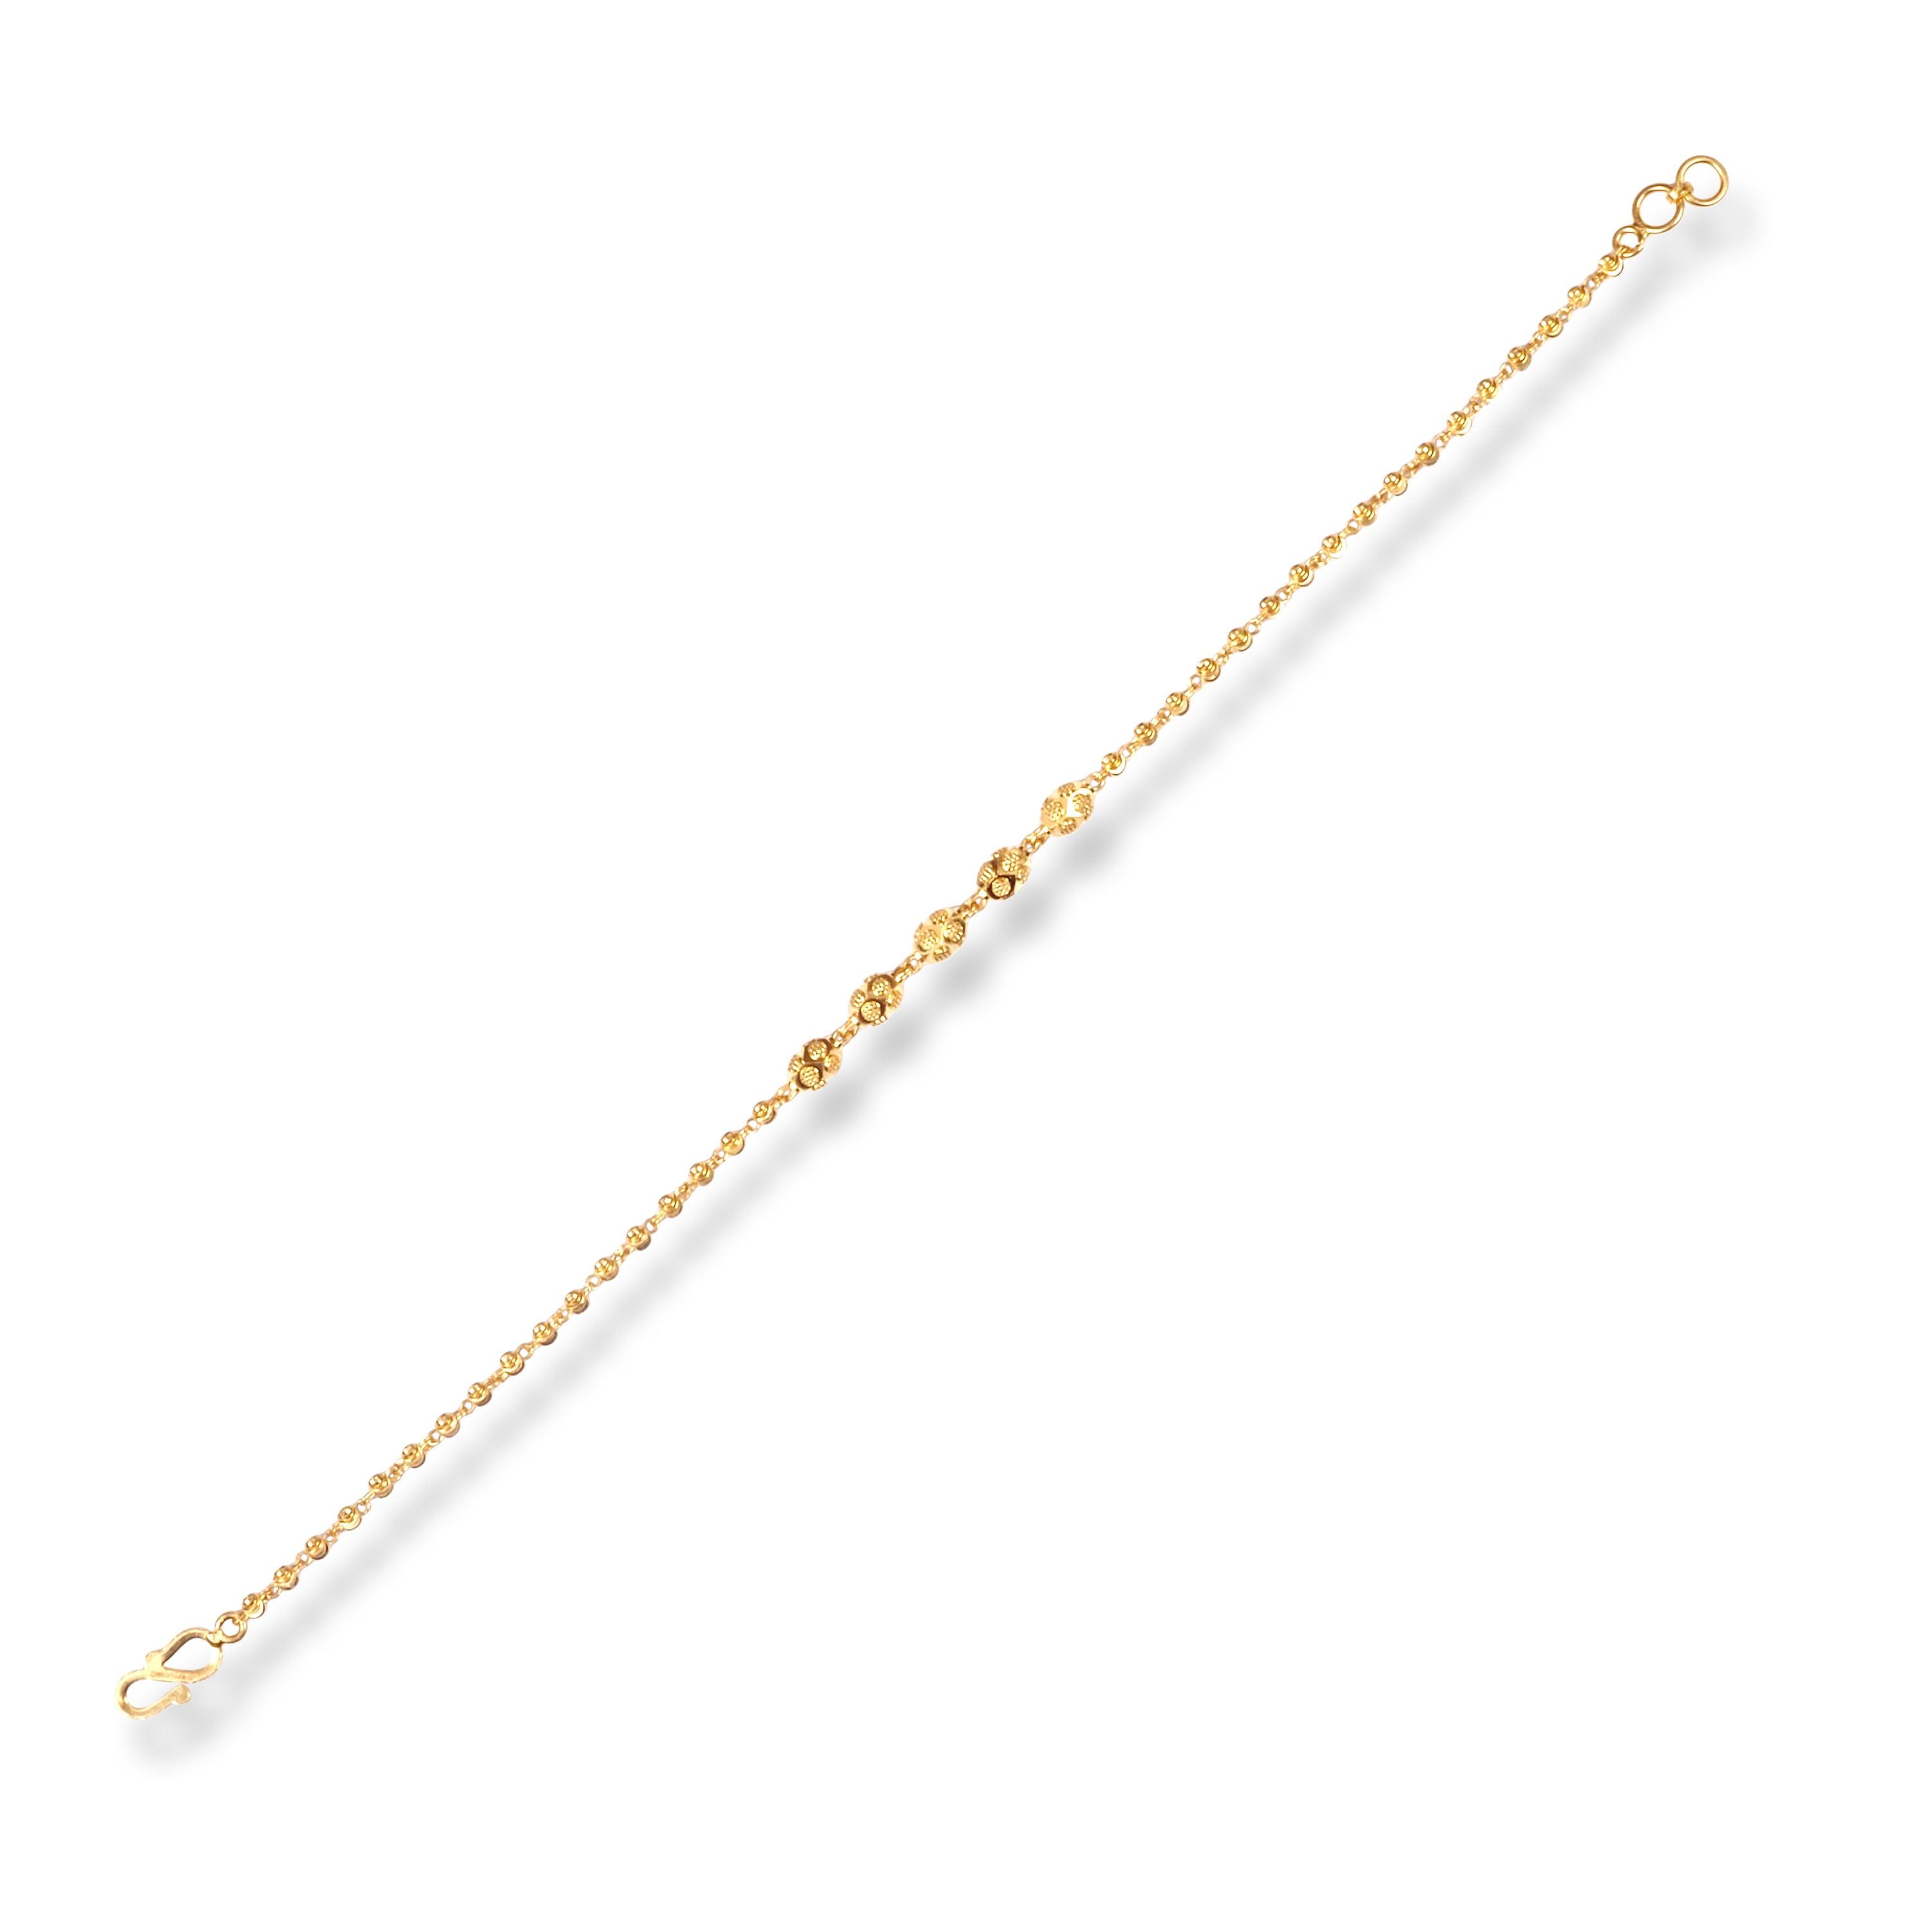 22ct Gold Ladies Bracelet with Five Diamond Cut Beads & S Clasp LBR-7156 - Minar Jewellers